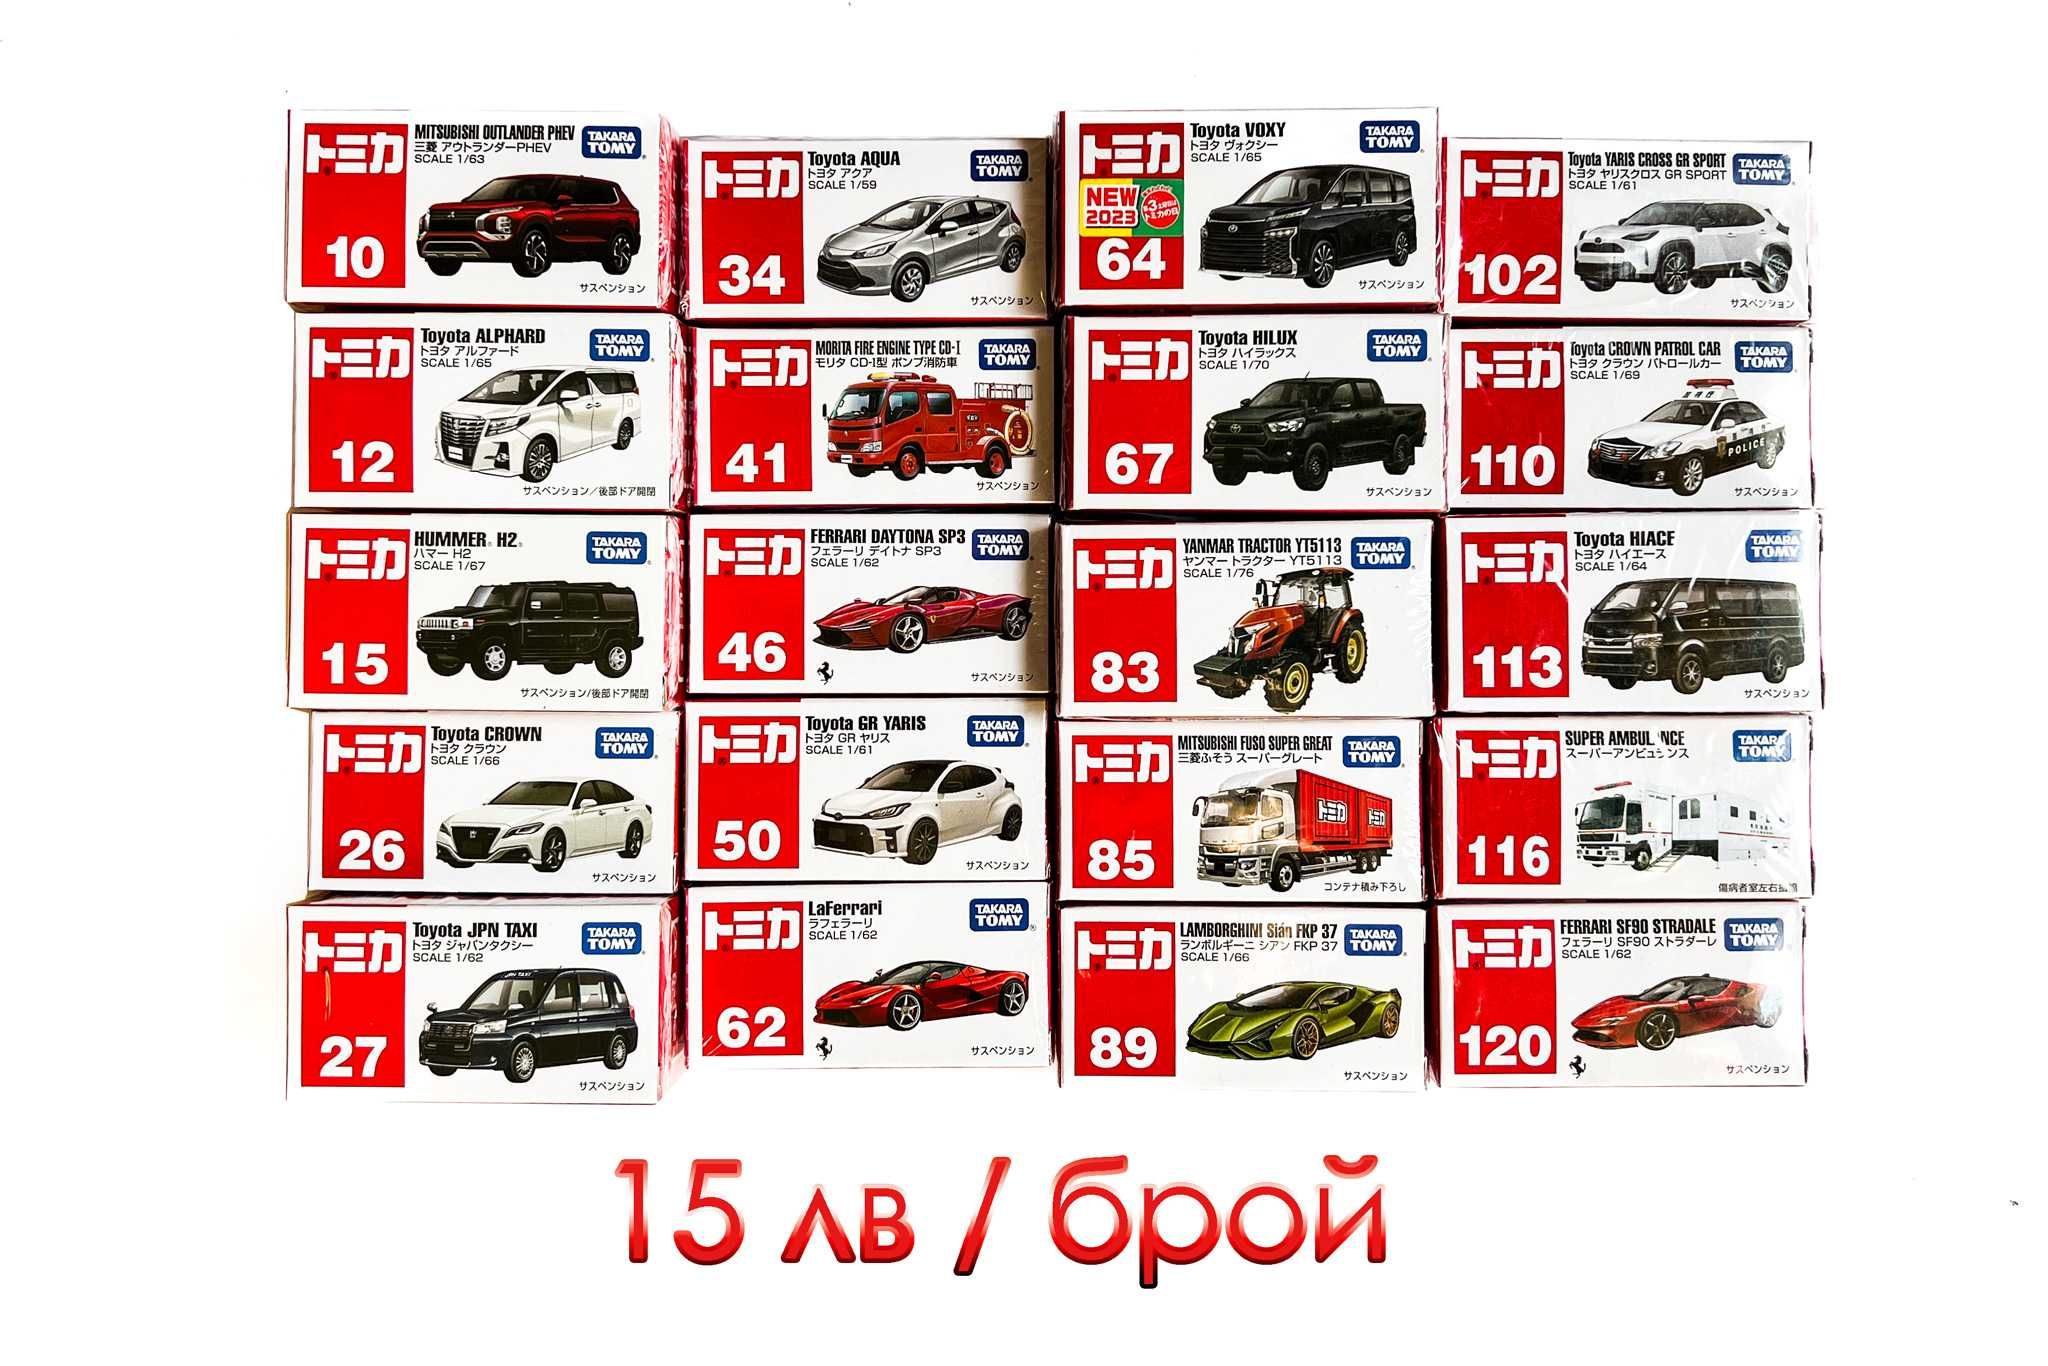 Hot Wheels Premium, Fast & Furious, Collectors, Boulevard, Tomica